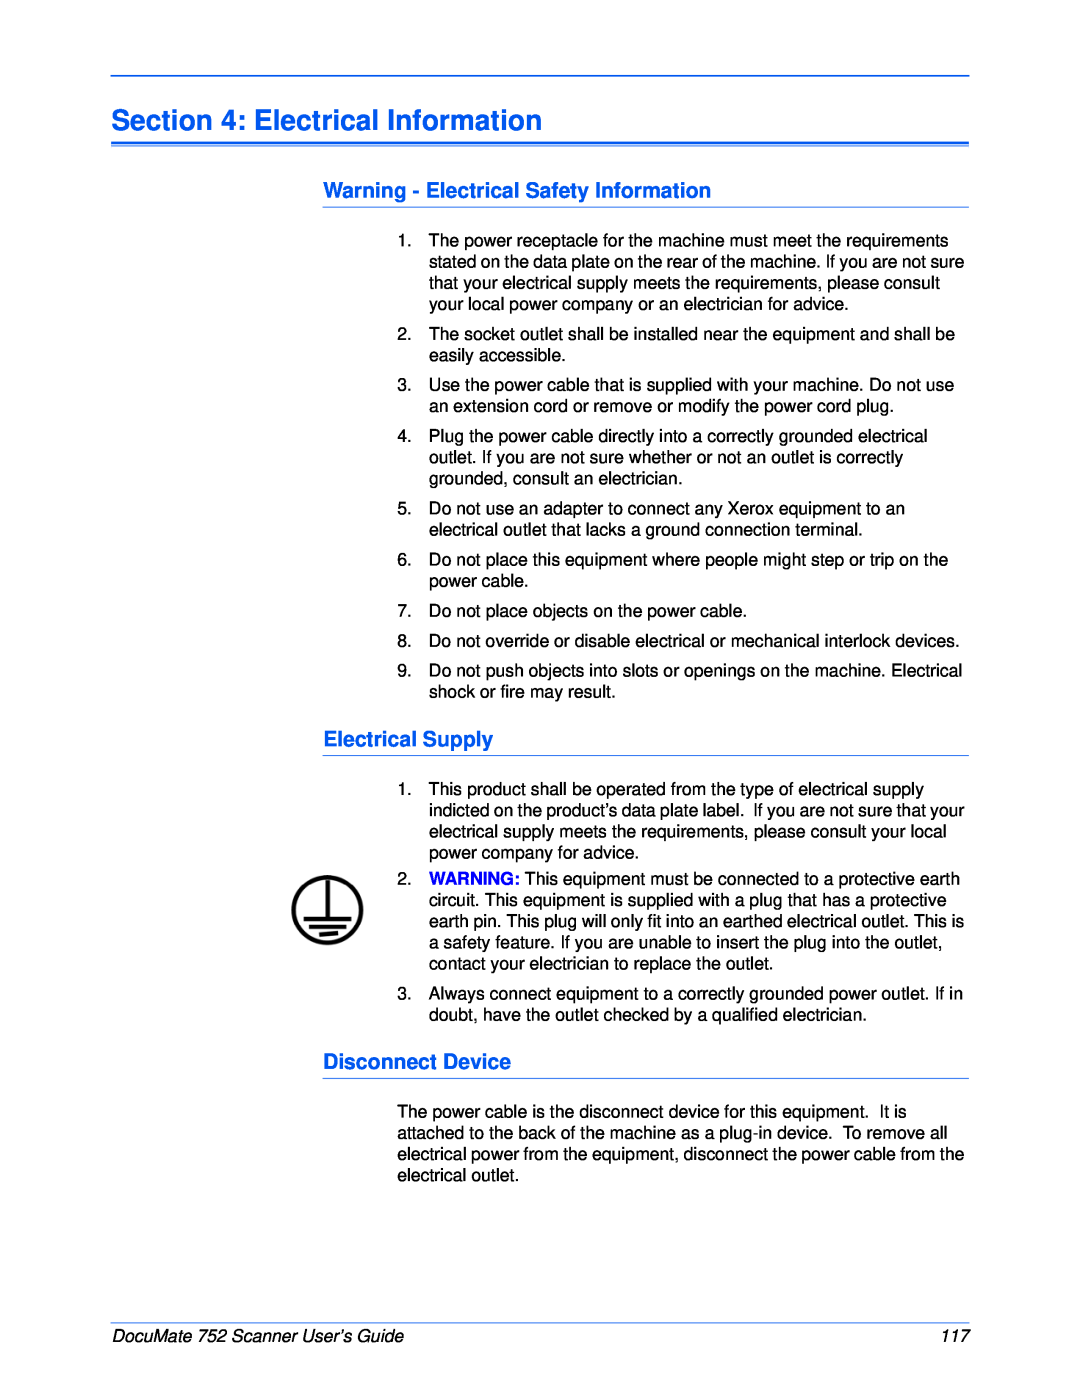 Xerox 752 manual Electrical Information, Warning - Electrical Safety Information, Electrical Supply, Disconnect Device 